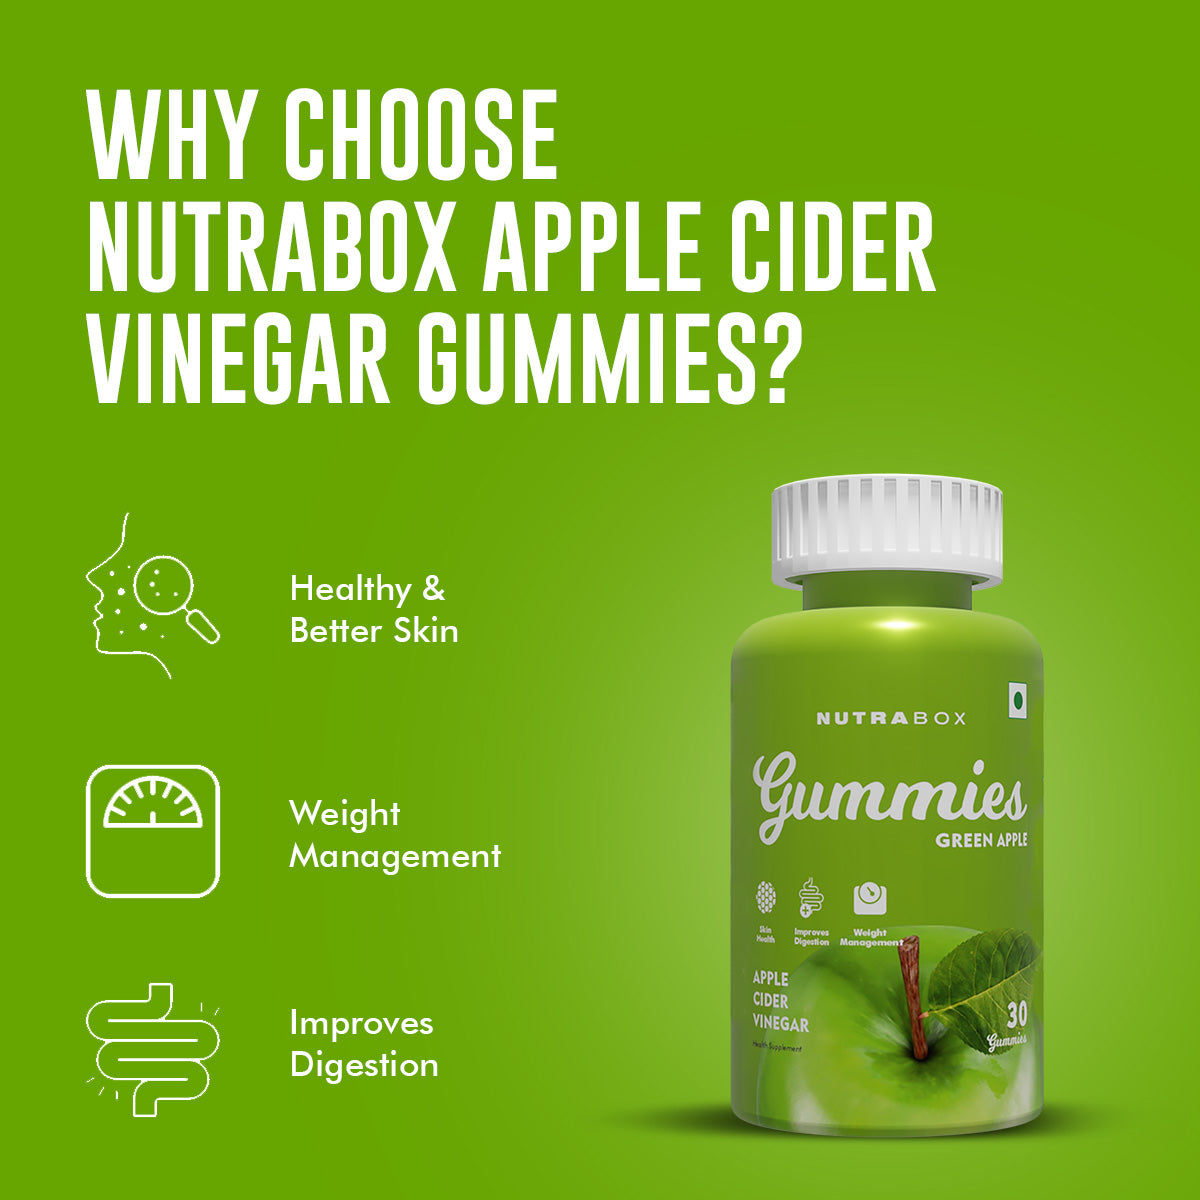 Why choose Nutrabox Apple Cider Vinegar Gummies?